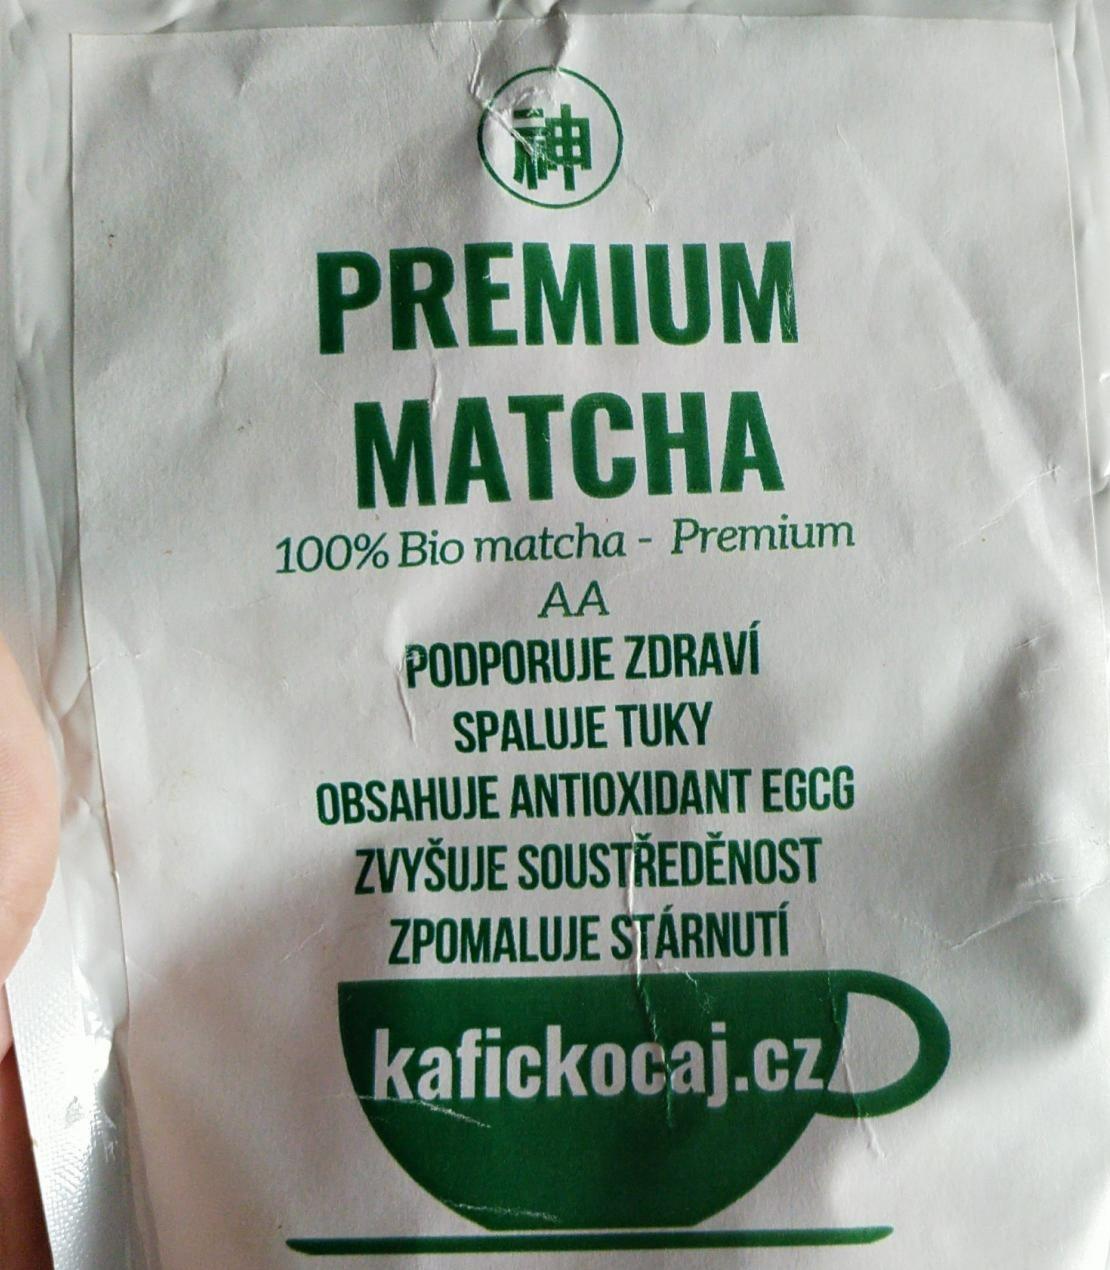 Fotografie - premium matcha kafickocaj.cz